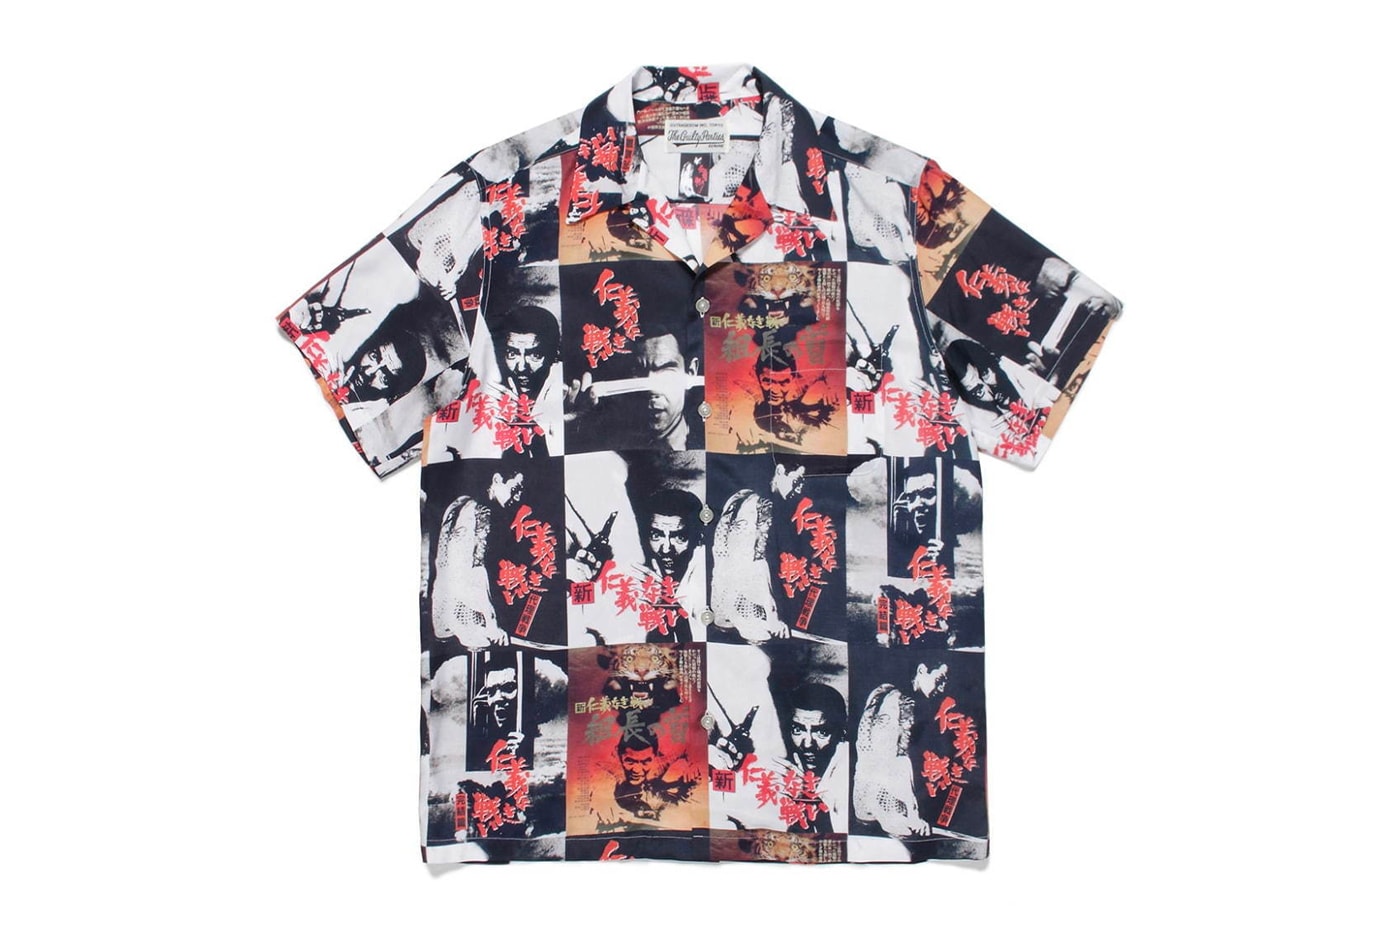 WACKO MARIA Battles Without Honor and Humanity Hawaiian Shirts short sleeve button ups graphics Kinji Fukasaku japanese streetwear menswear spring summer 2020 collection